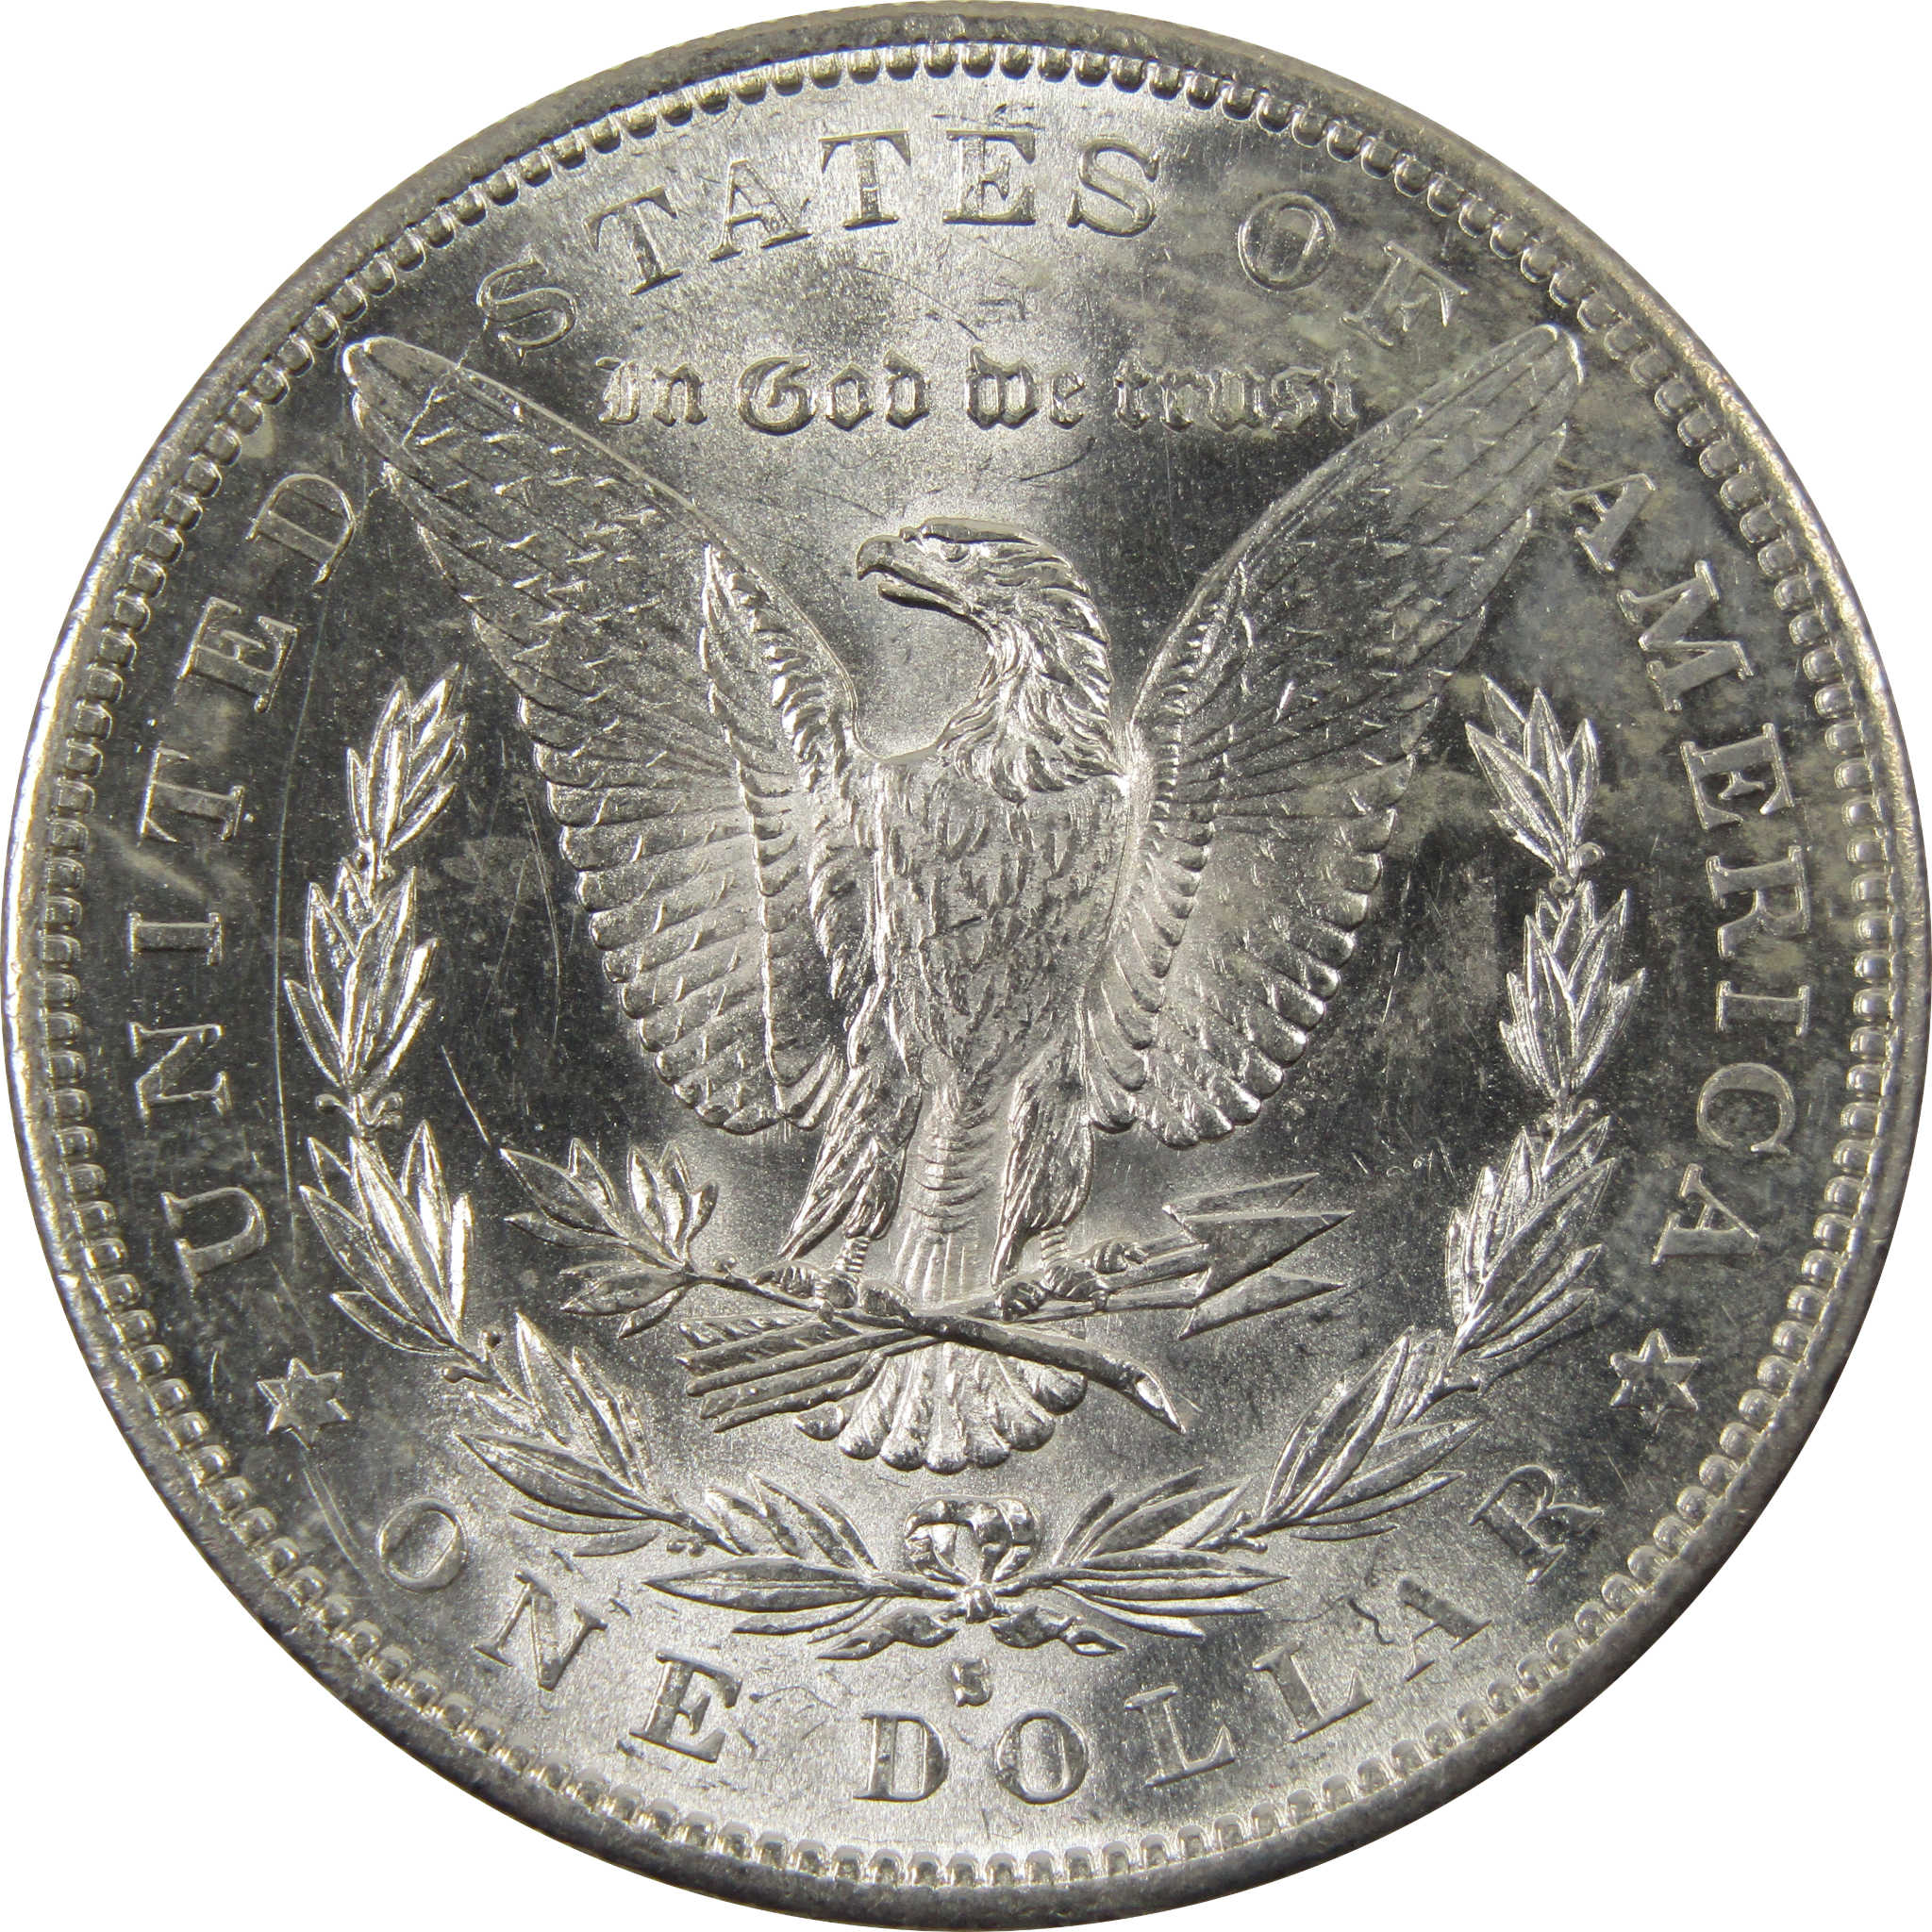 1890 S Morgan Dollar BU Uncirculated 90% Silver $1 Coin SKU:I9409 - Morgan coin - Morgan silver dollar - Morgan silver dollar for sale - Profile Coins &amp; Collectibles